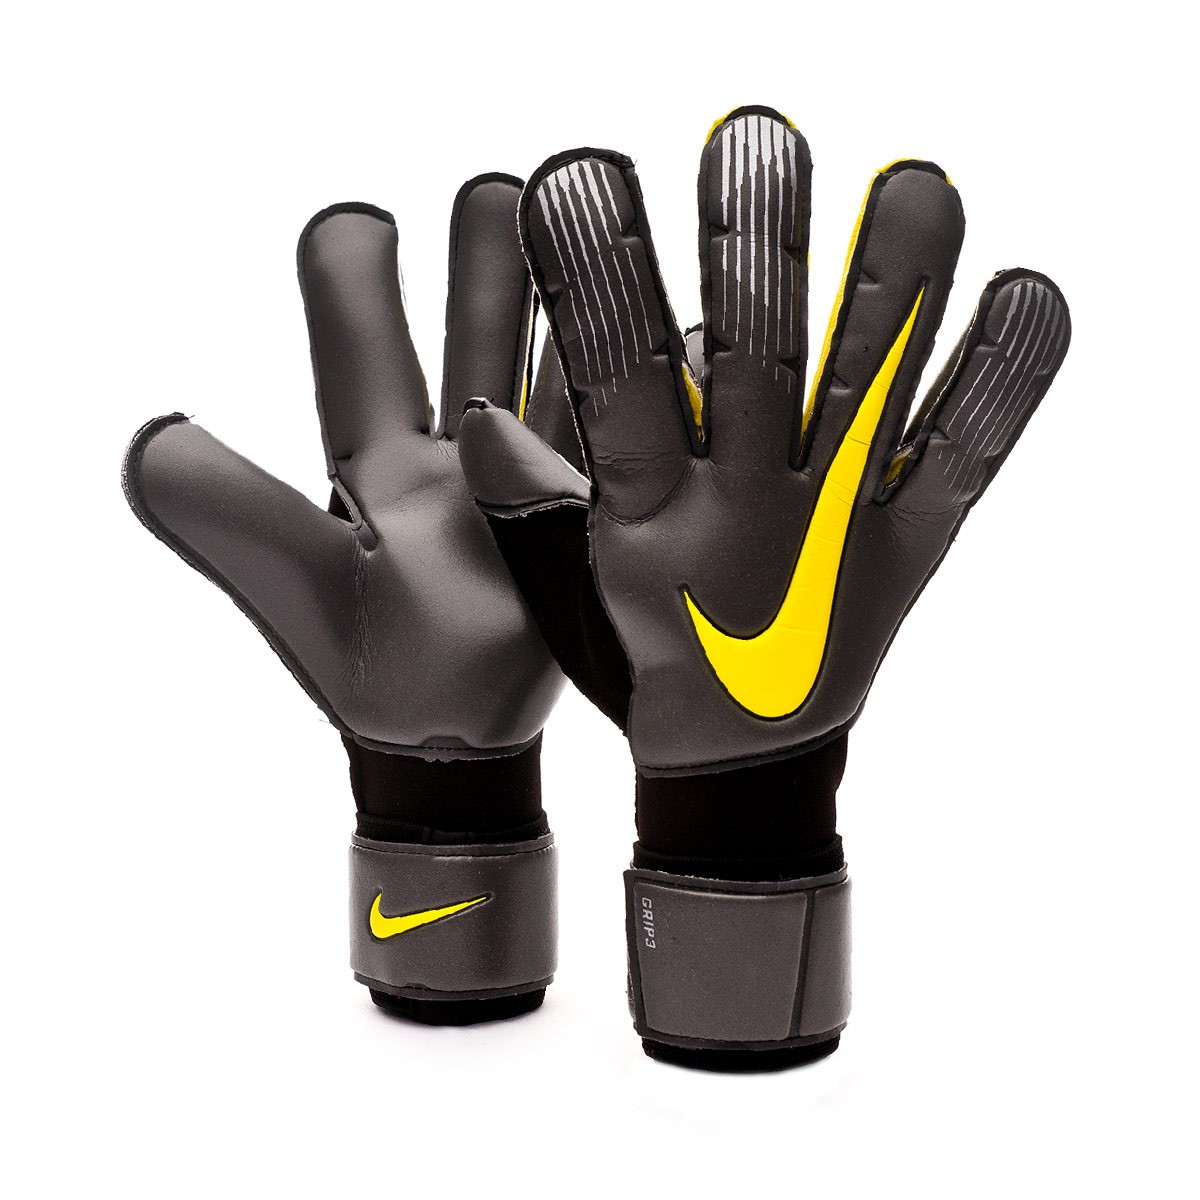 Guante de portero Nike Grip 3 Anthracite-Black-Optical yellow 